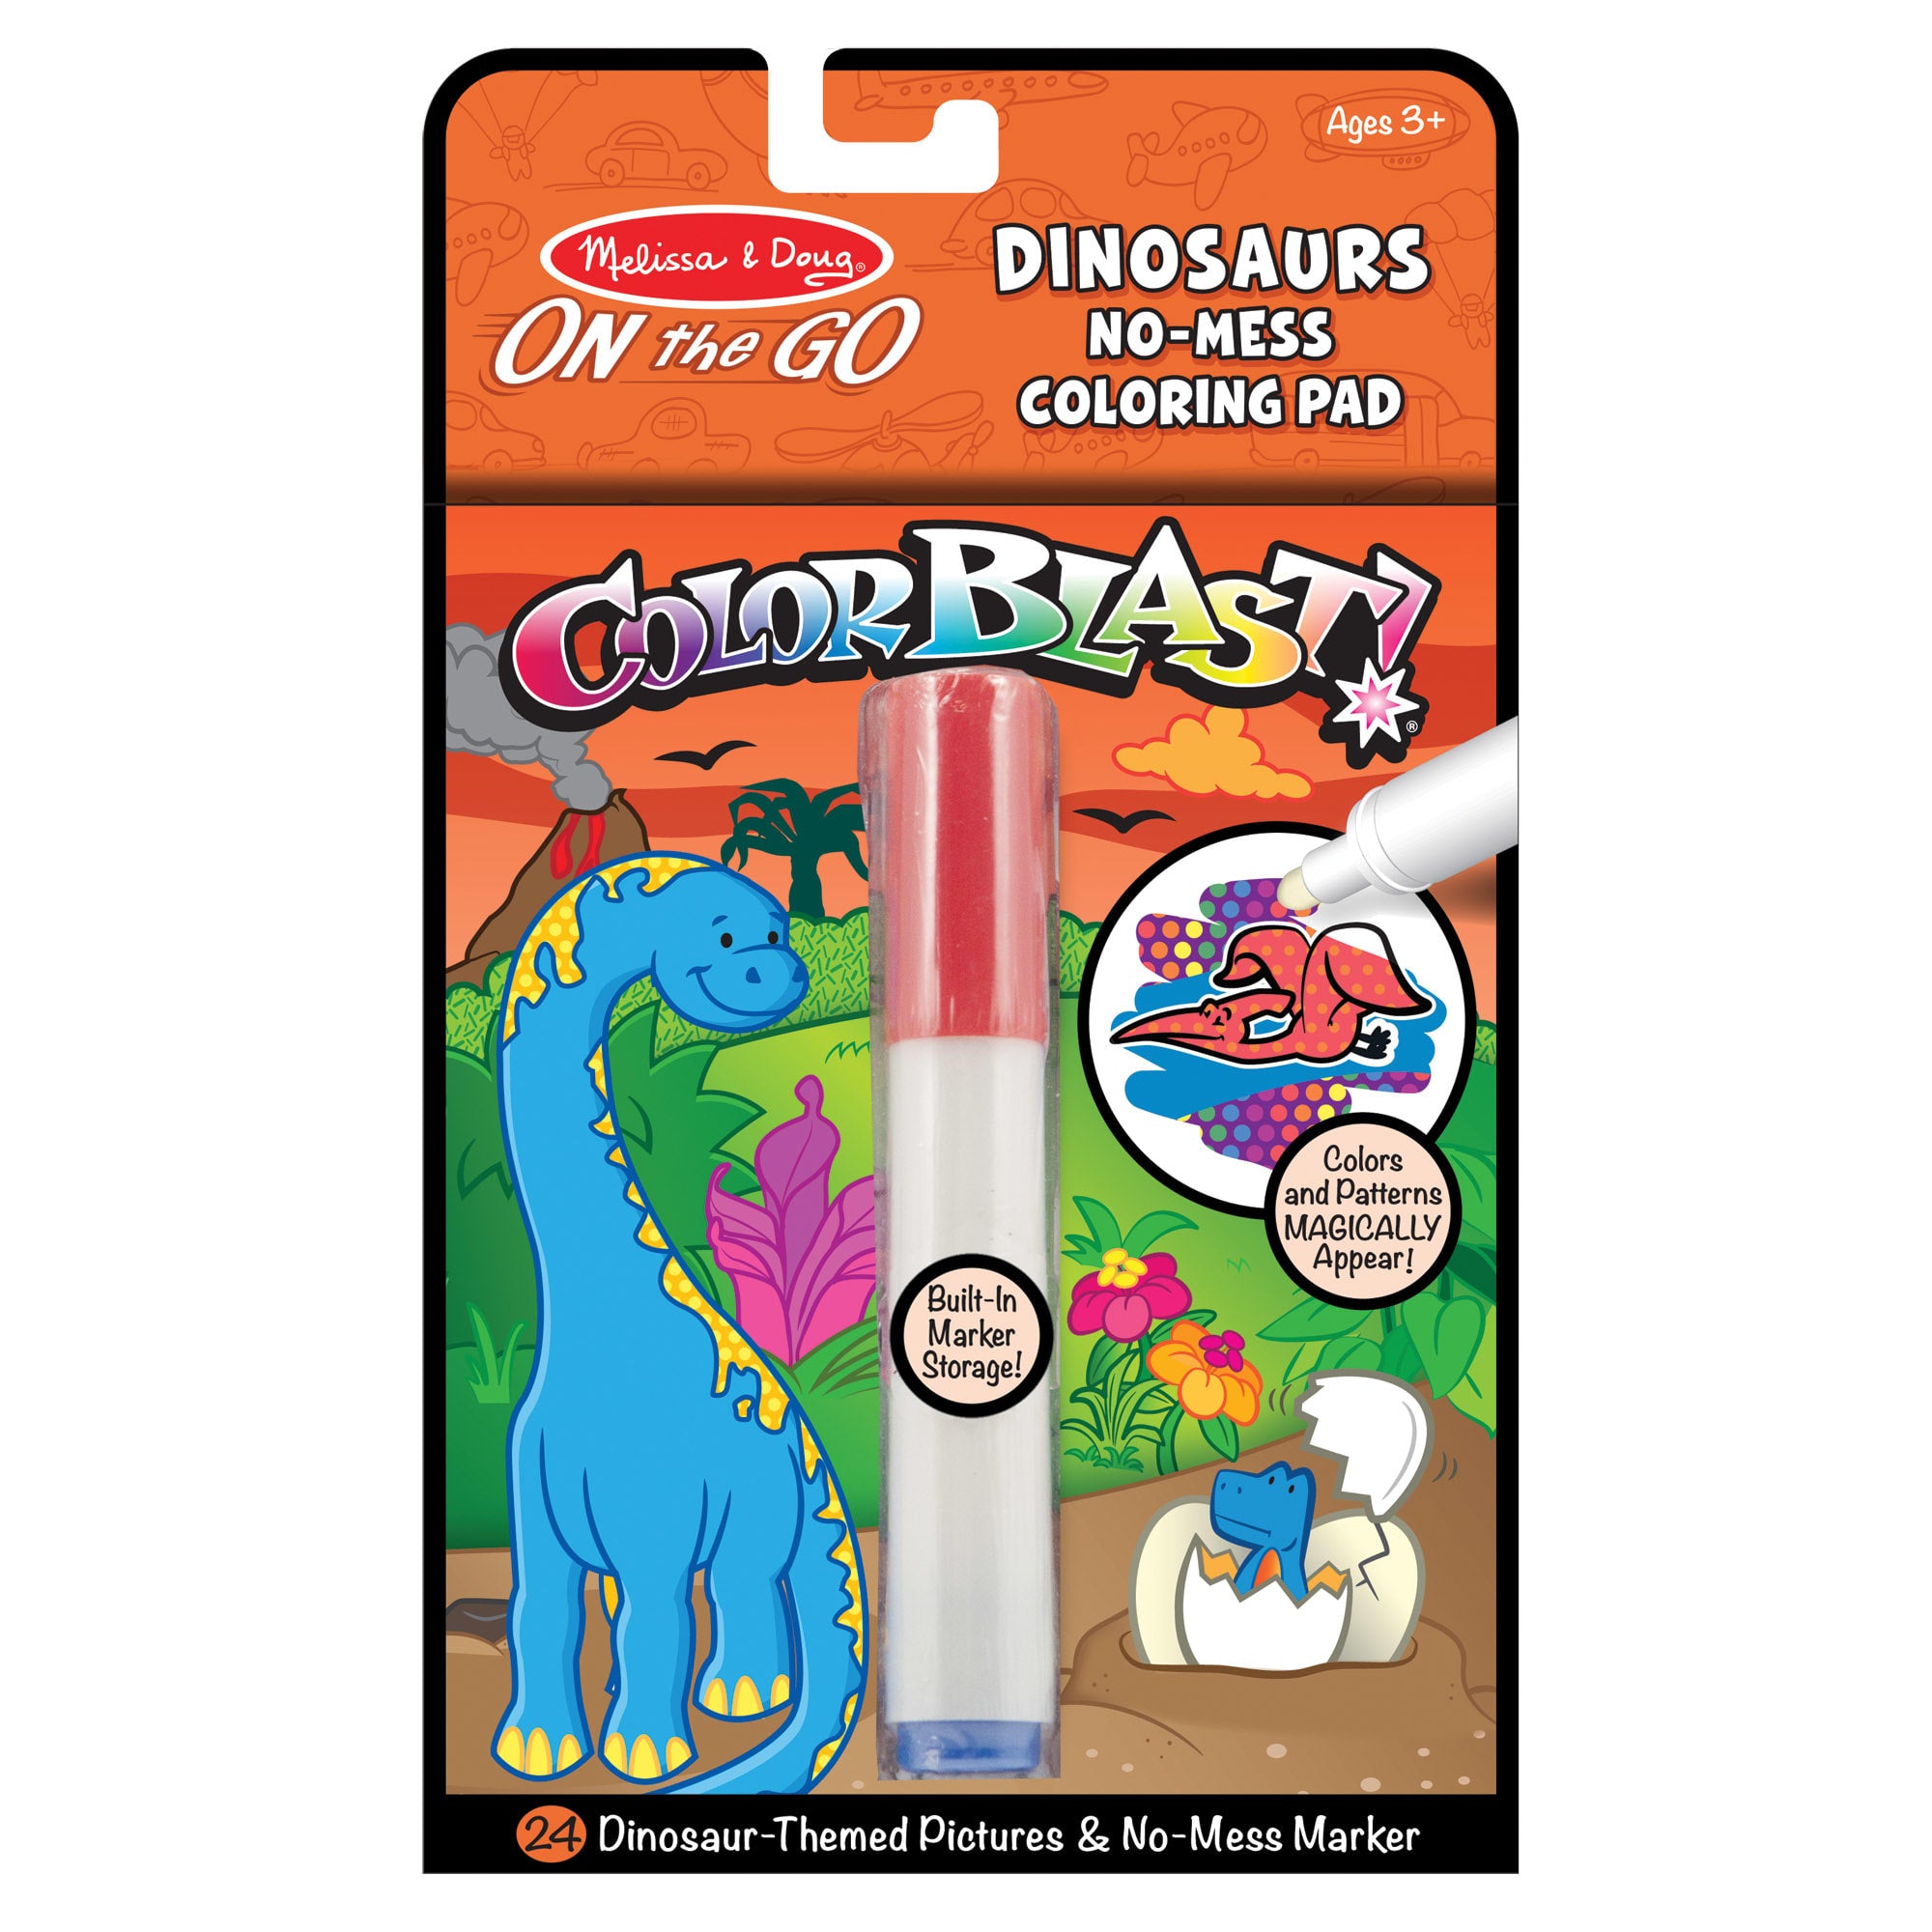 Melissa & Doug On the Go ColorBlast No-Mess Coloring Pad / Dinosaurs